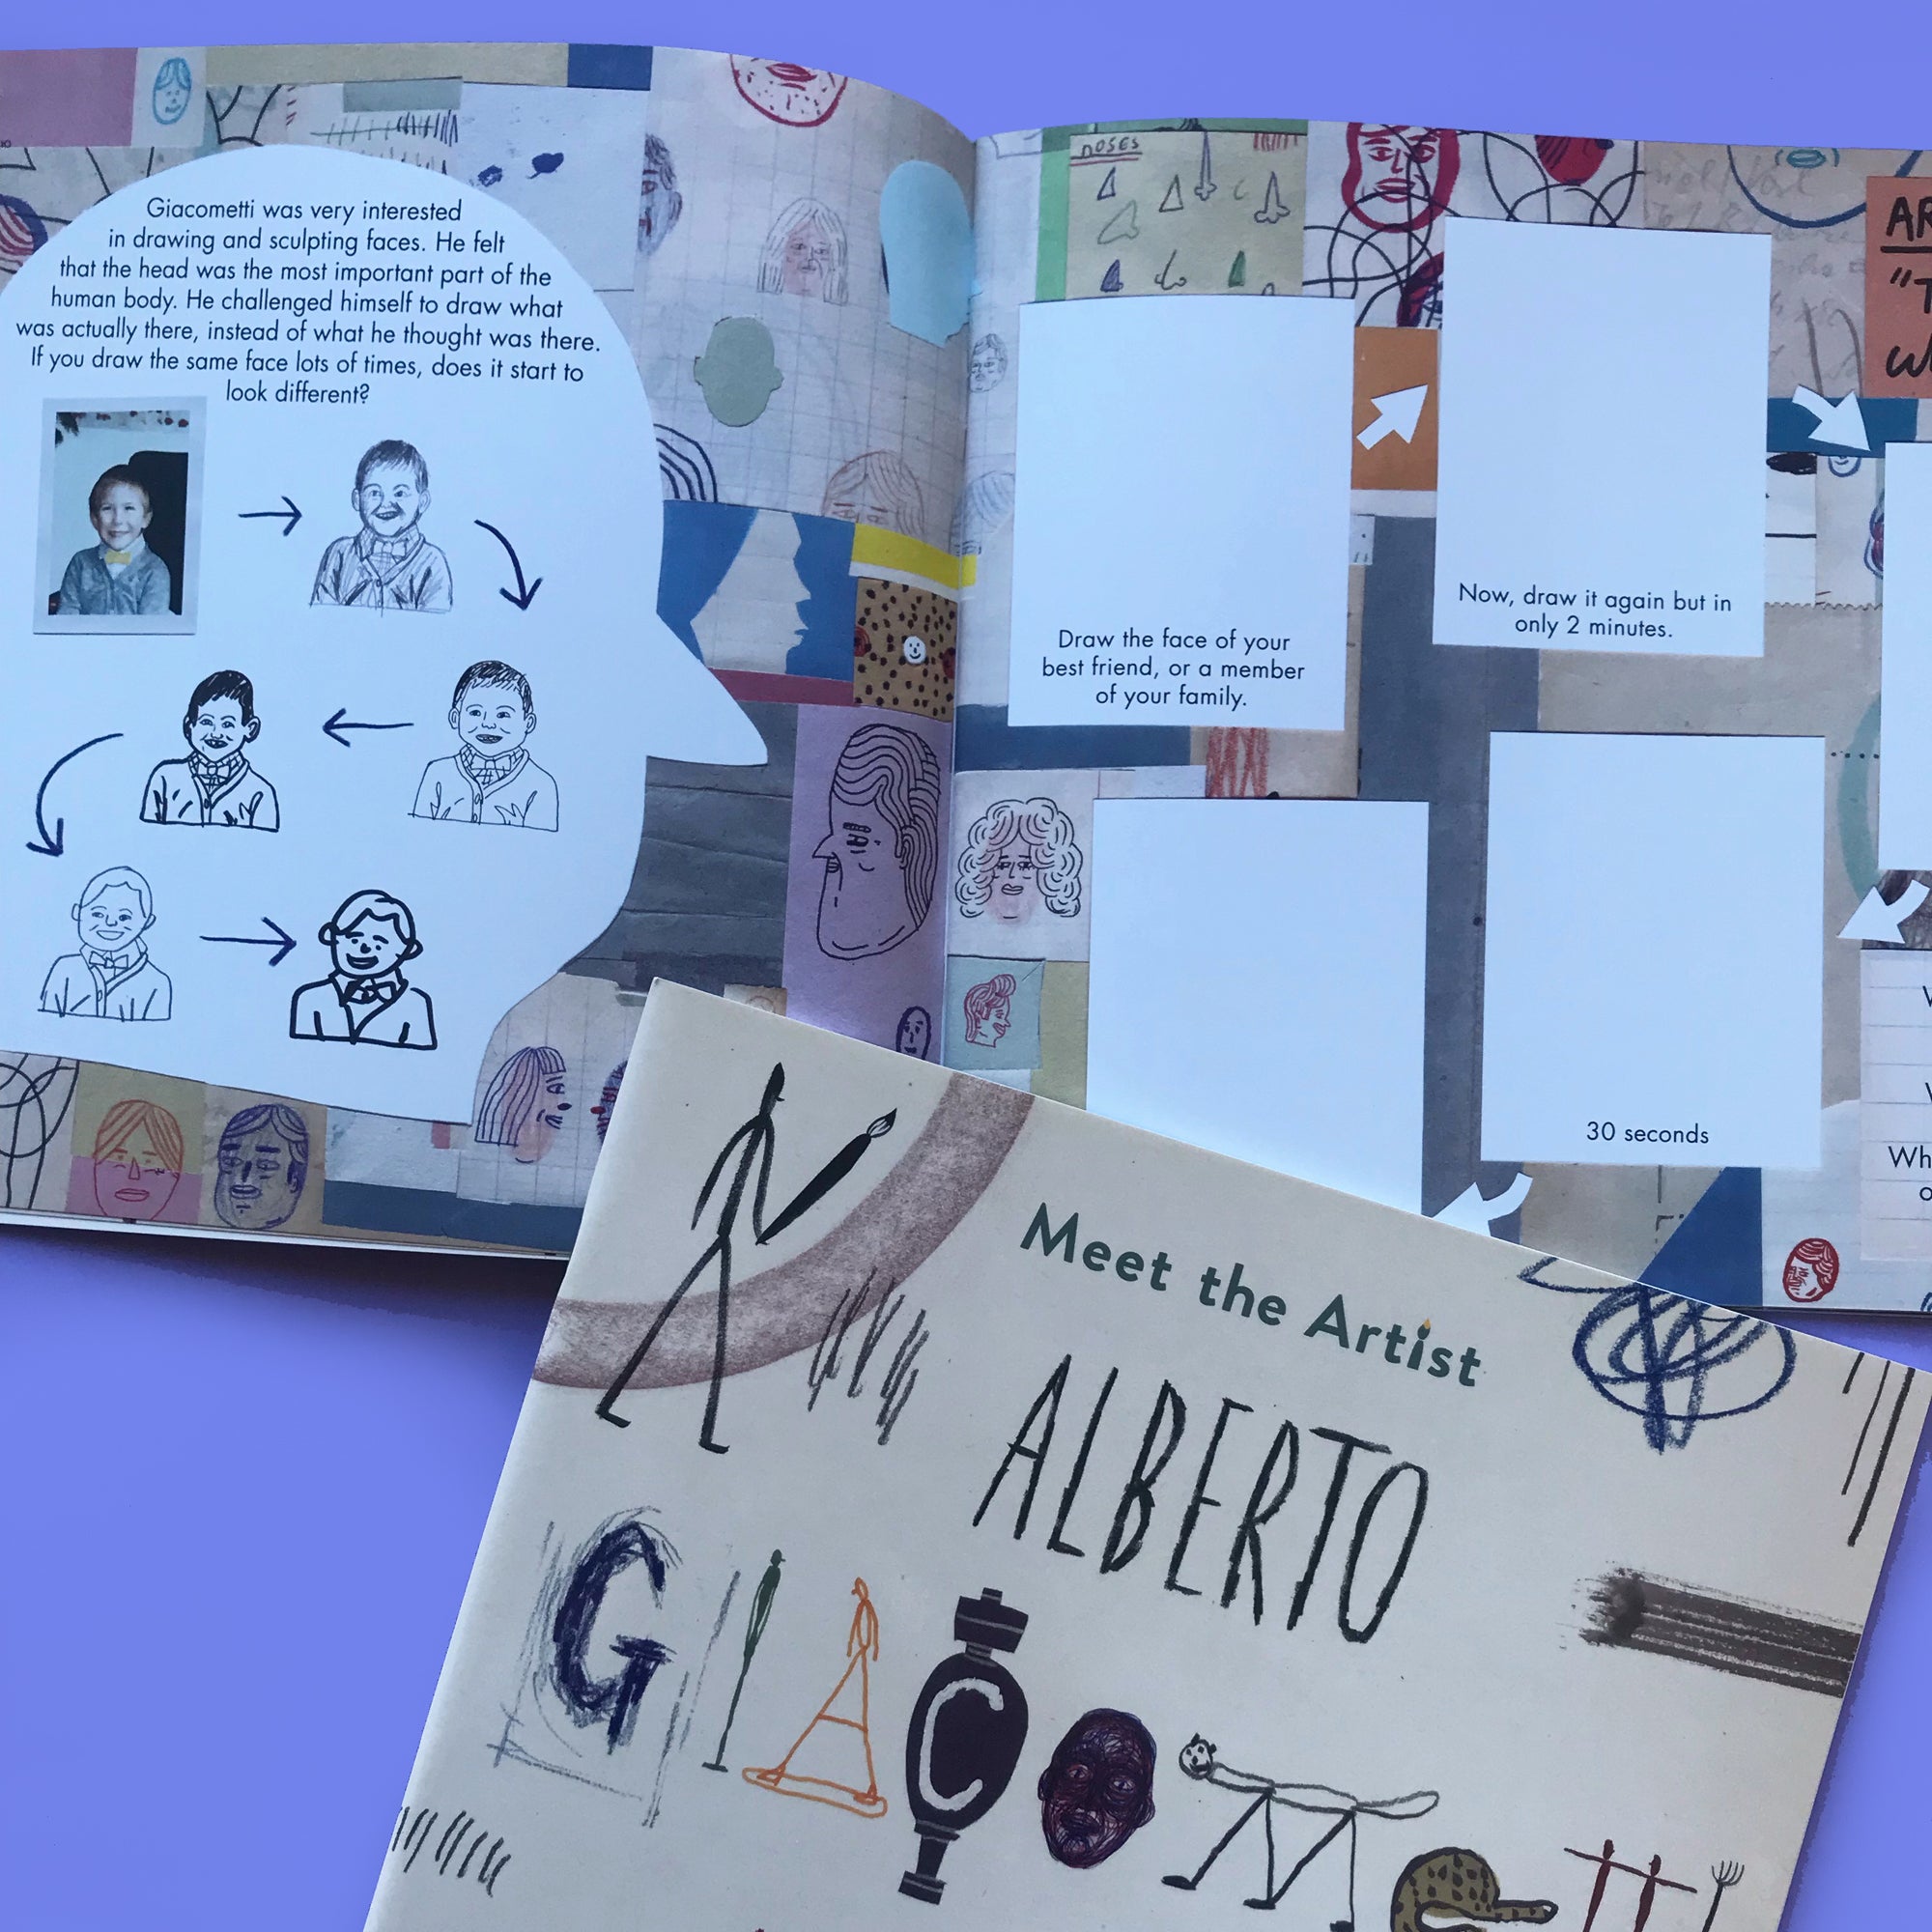 Meet the Artist: Alberto Giacometti activity book